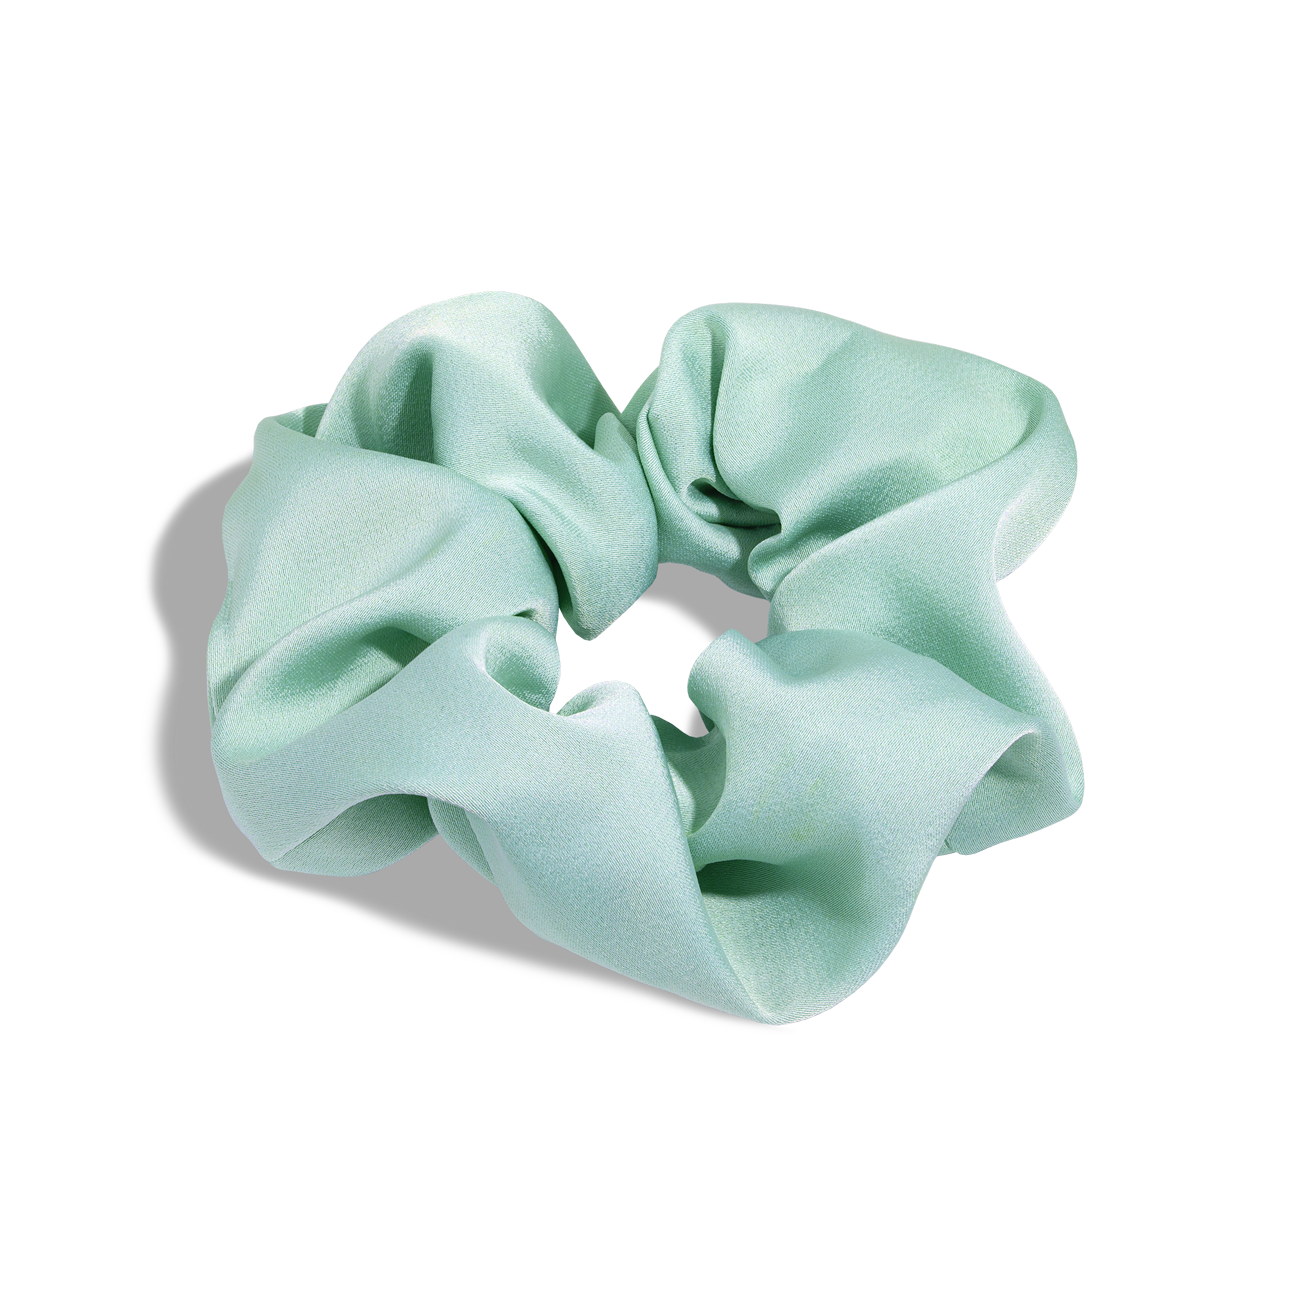 Shimmering Scrunchie Medium - More Colors